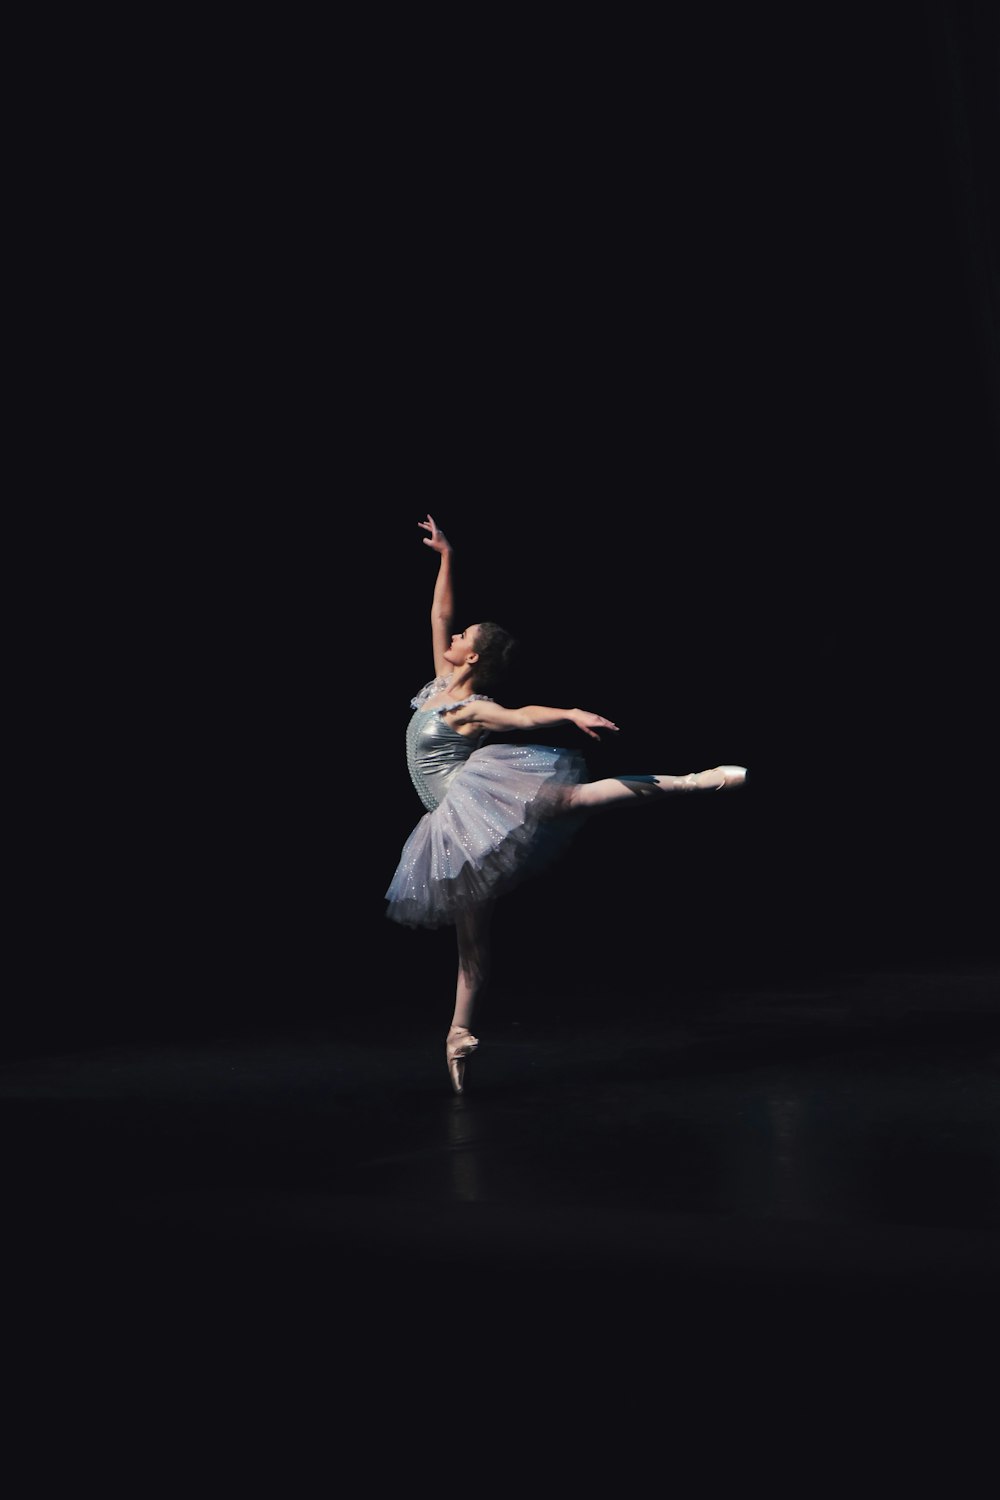 person dancing ballet photo – Free Dance Image on Unsplash